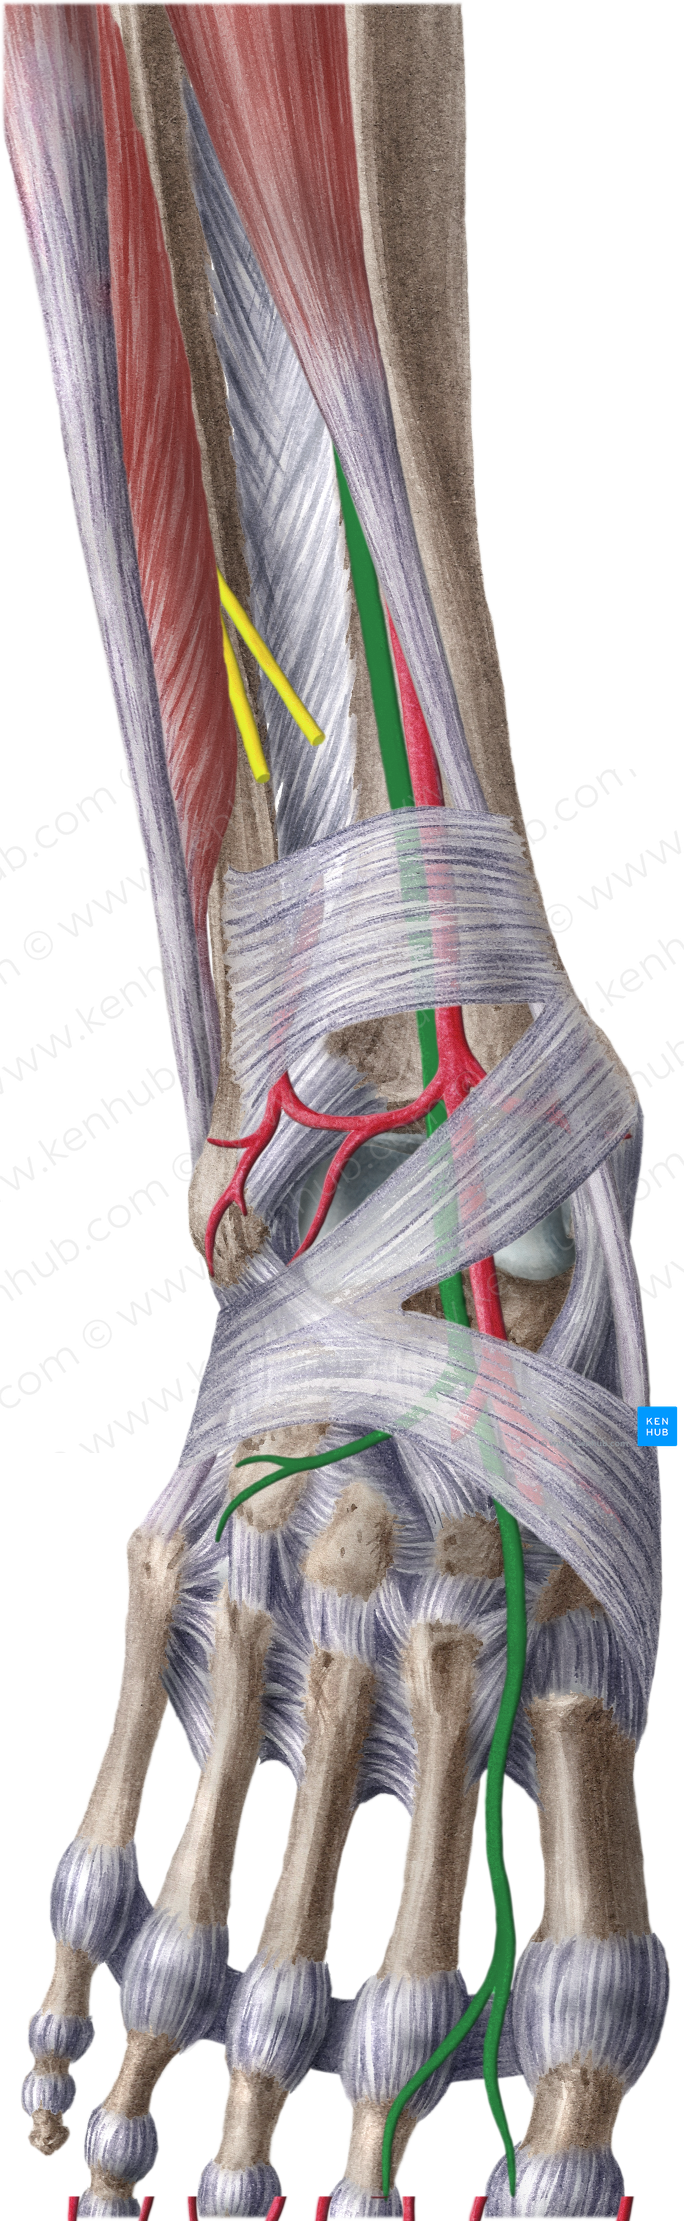 Deep fibular nerve (#6663)